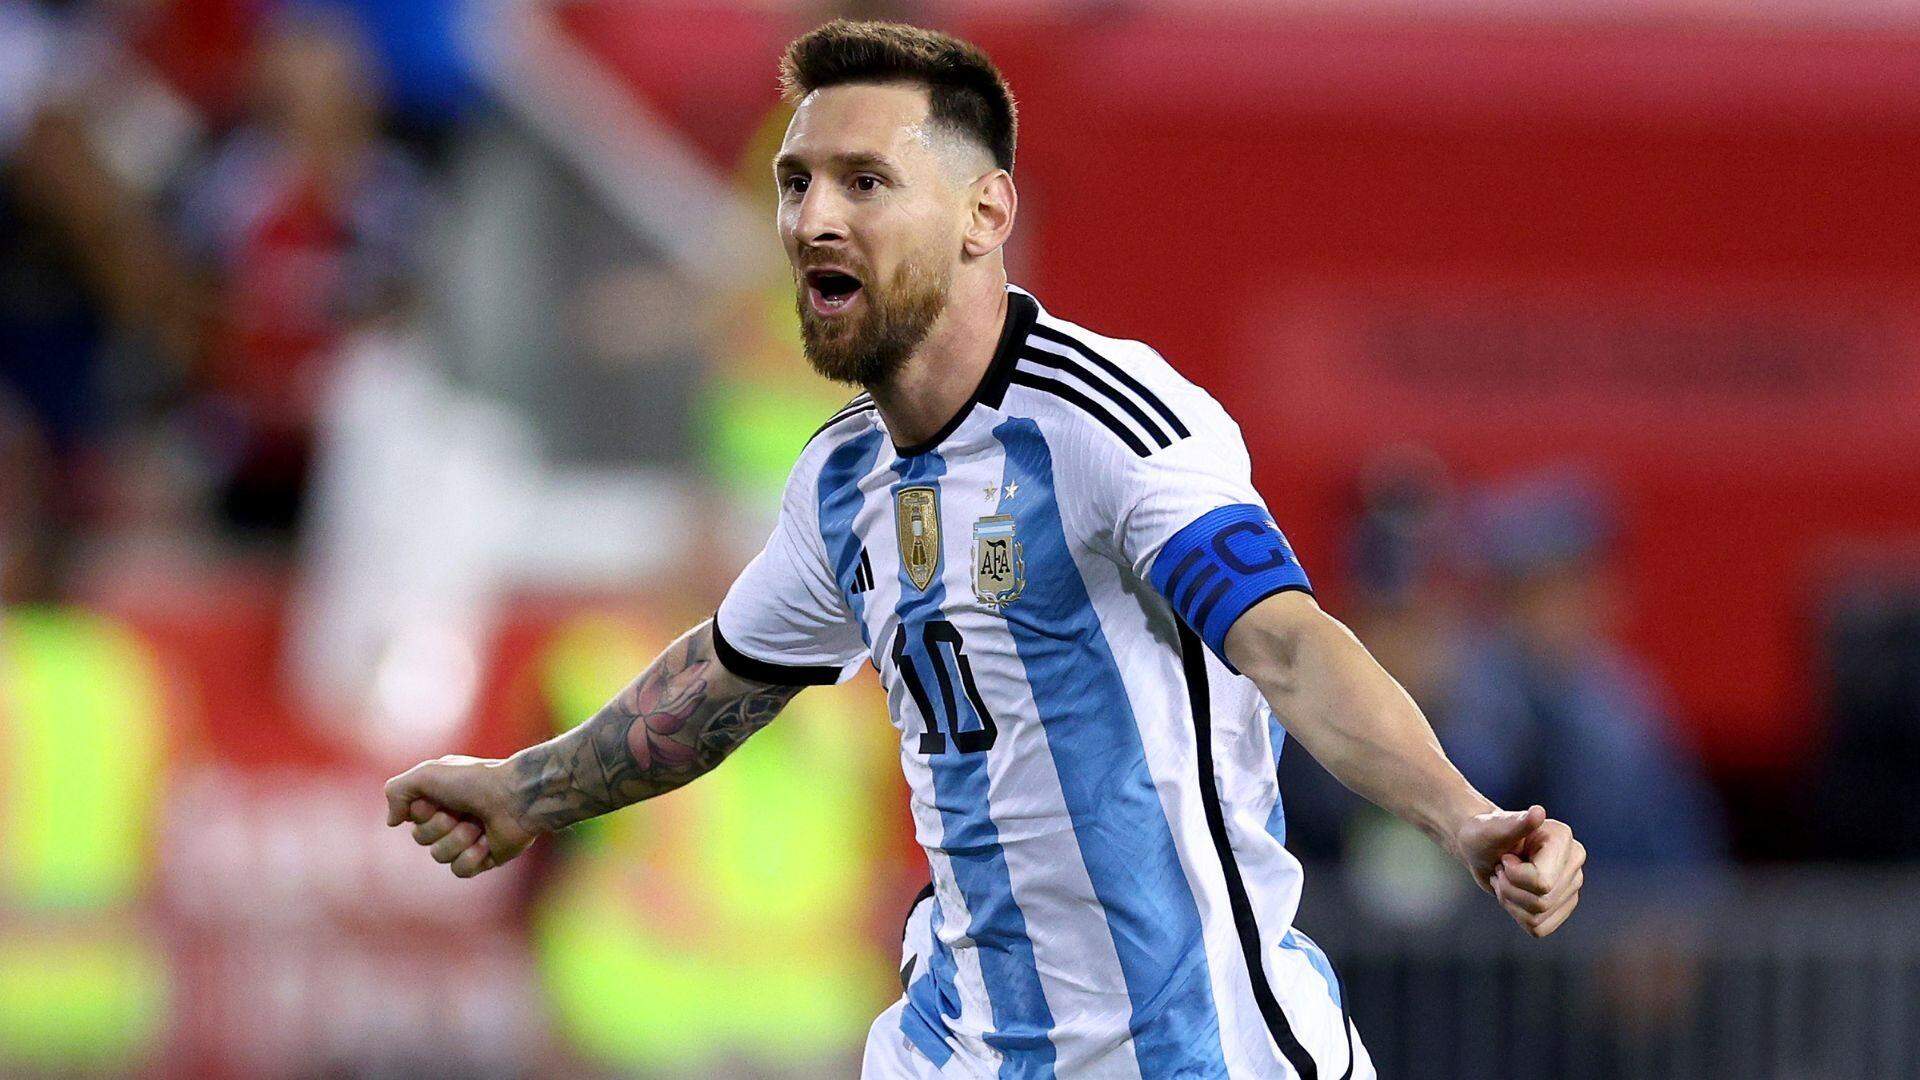 Argentina anuncia lista de convocados para a Copa do Mundo